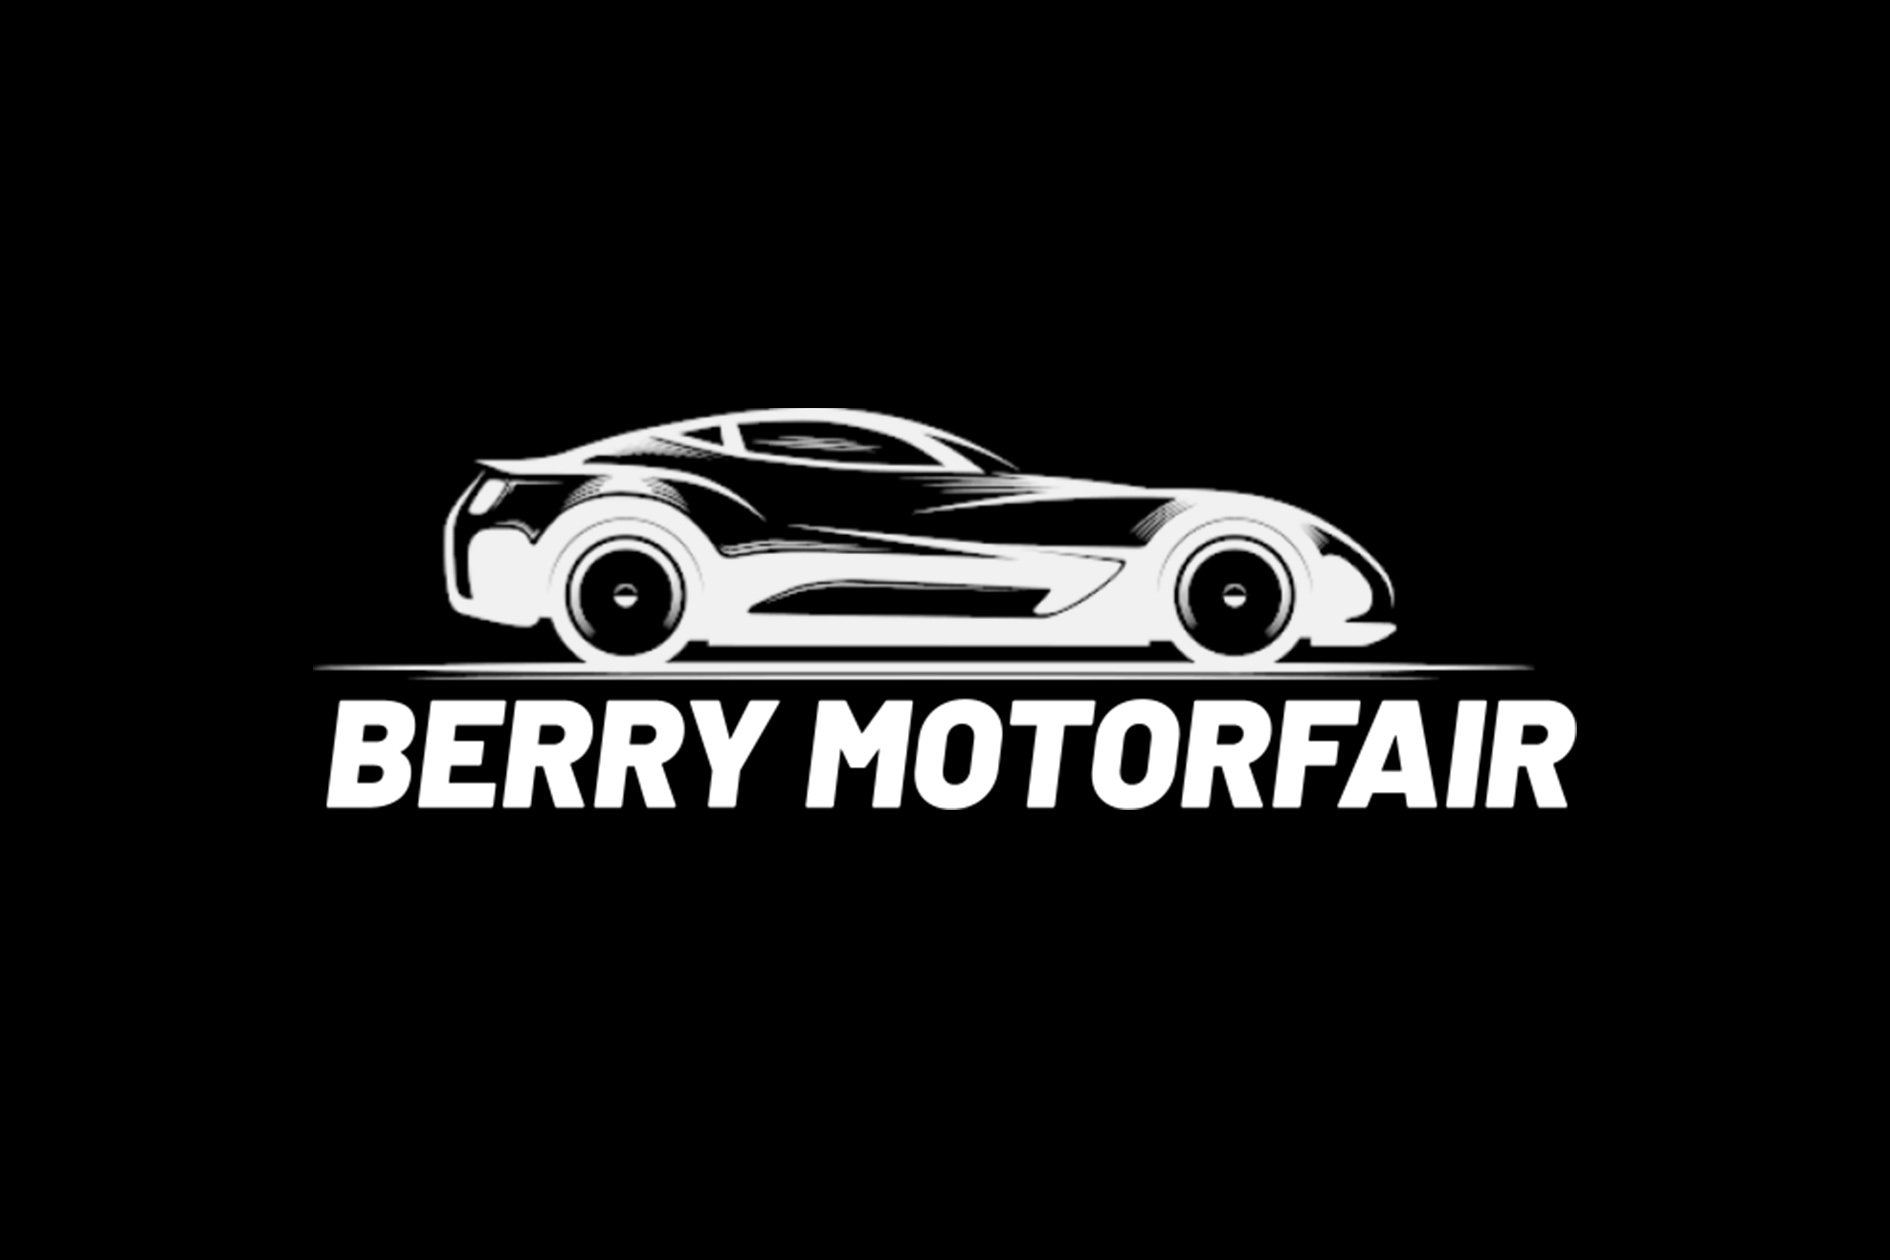 Berry Motor Fair.jpg